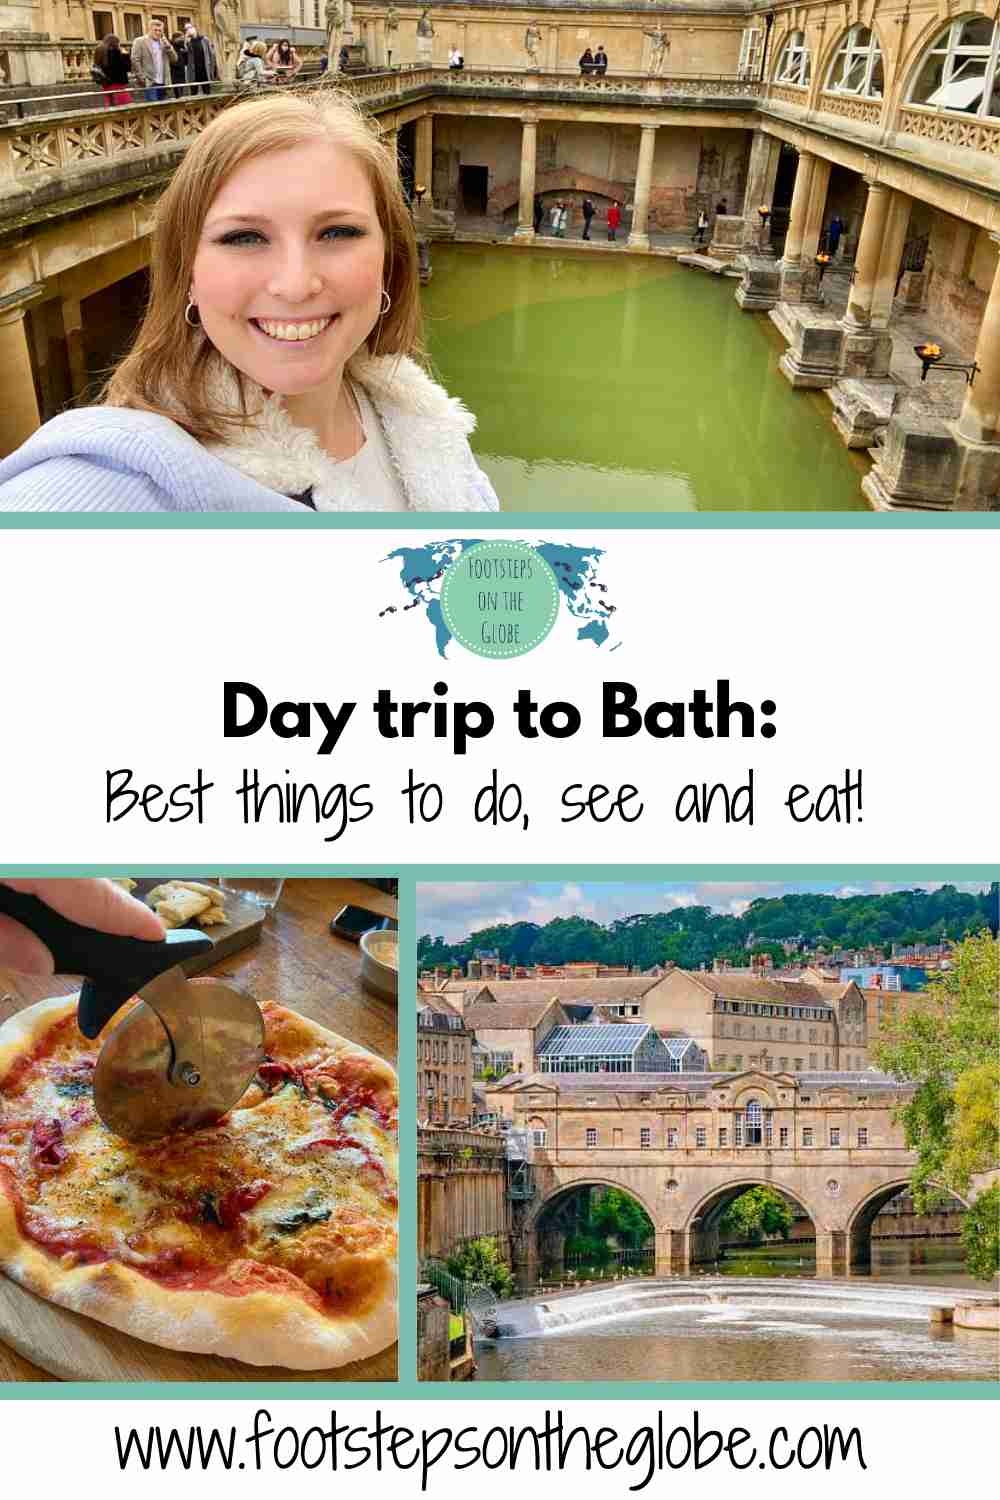 Day trip to Bath Pinterest image